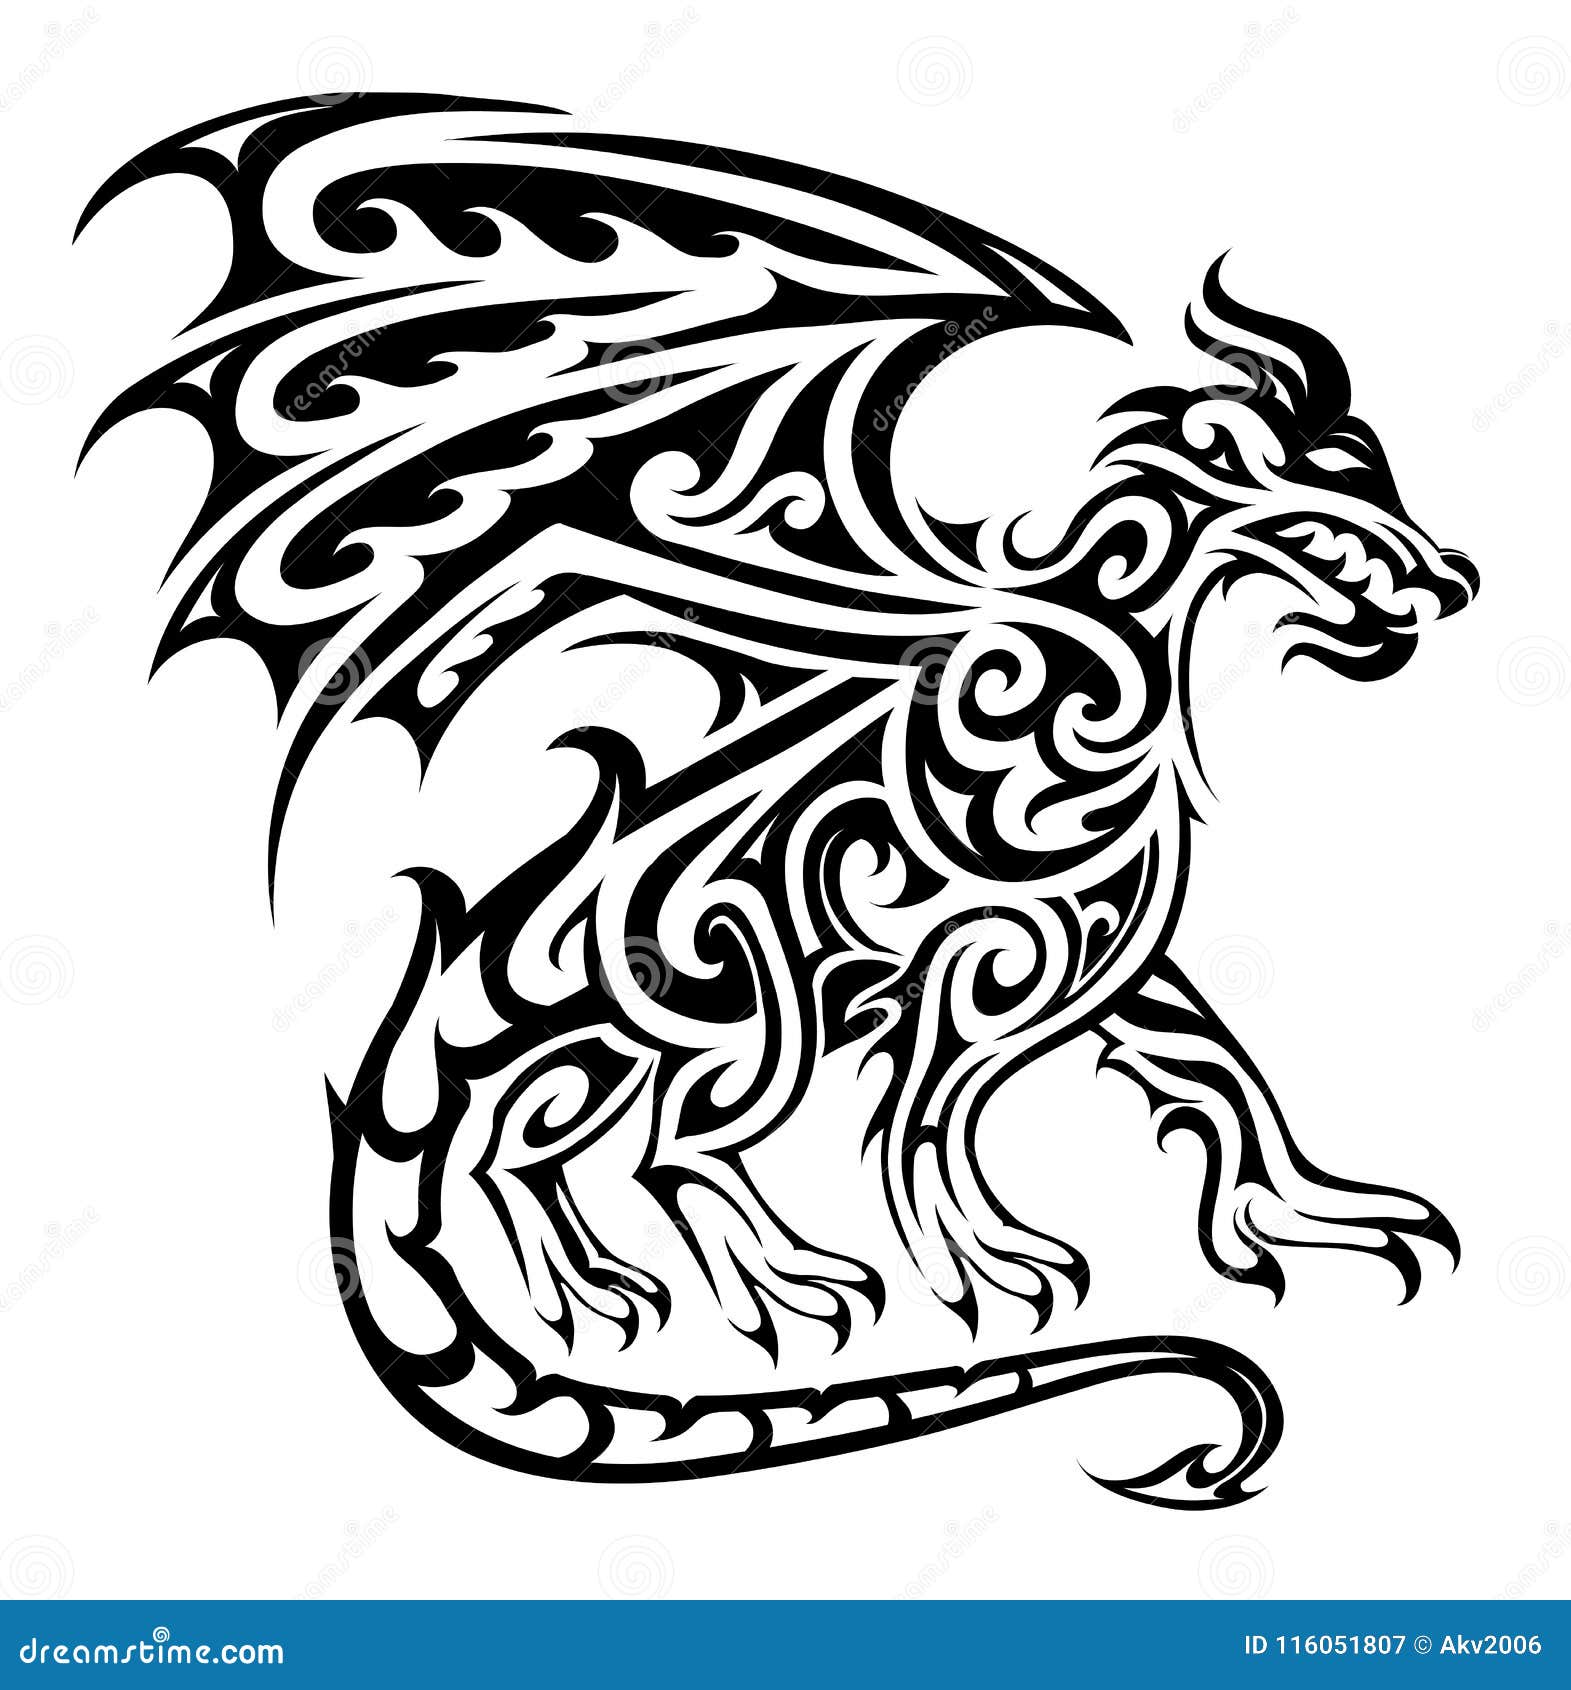 Dragon tribal tattoo stock vector. Illustration of ethnic - 116051807